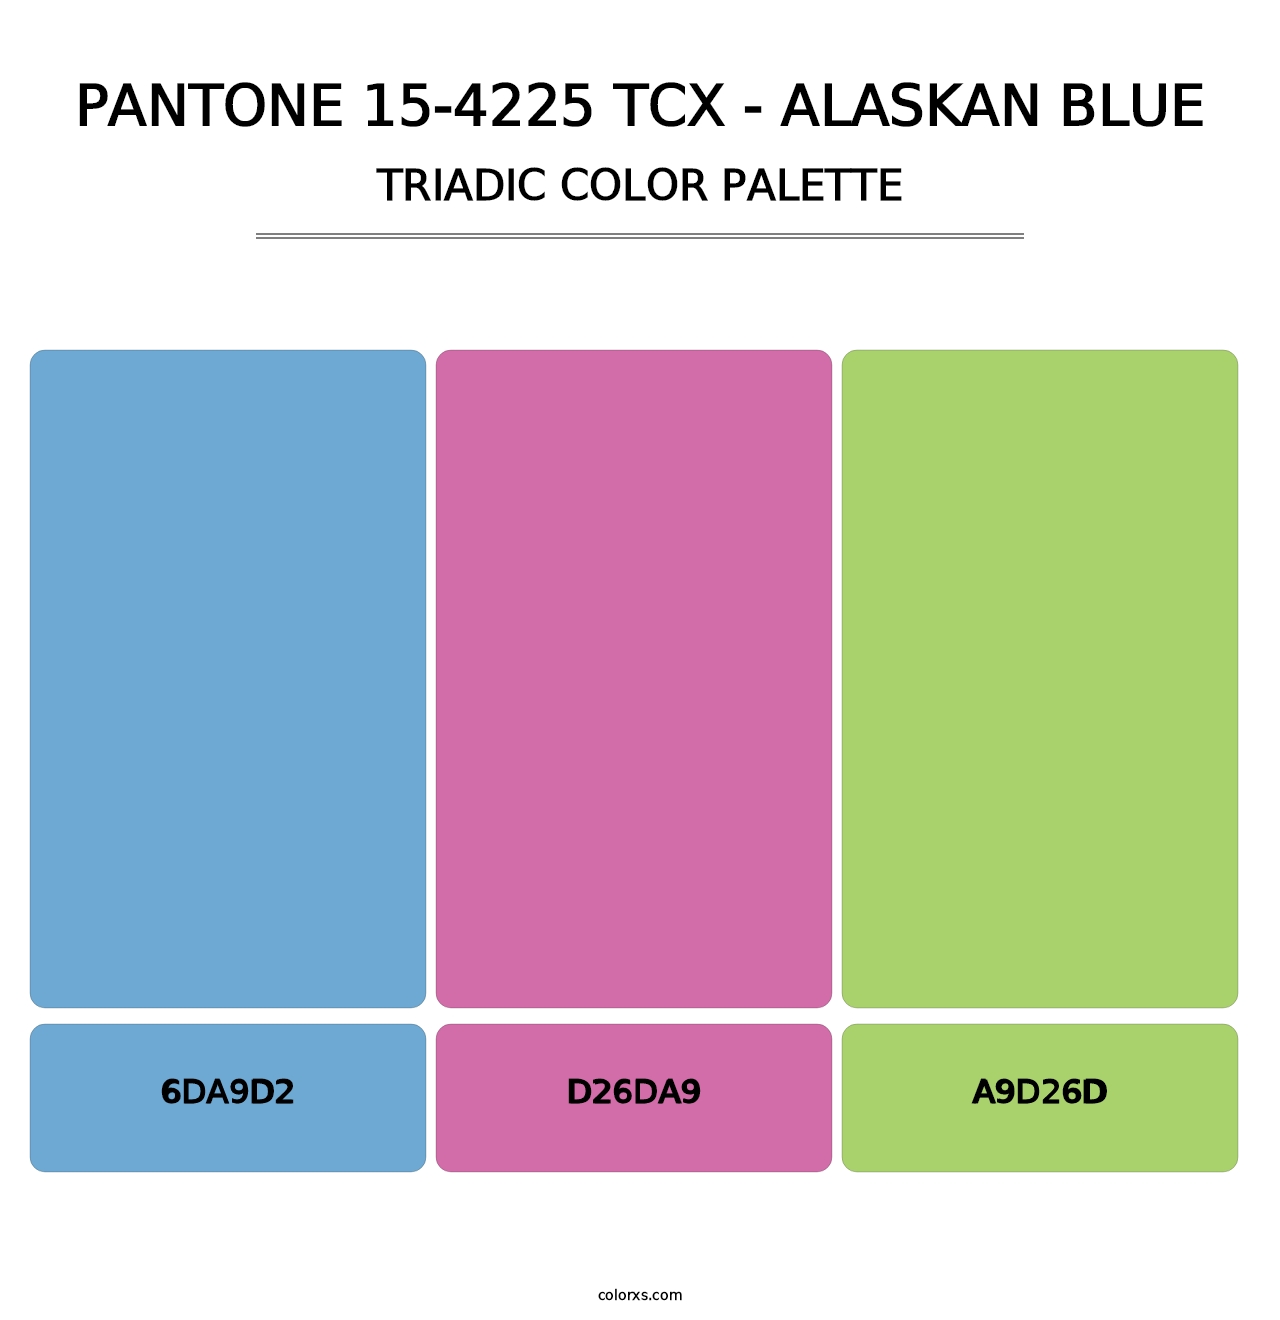 PANTONE 15-4225 TCX - Alaskan Blue - Triadic Color Palette